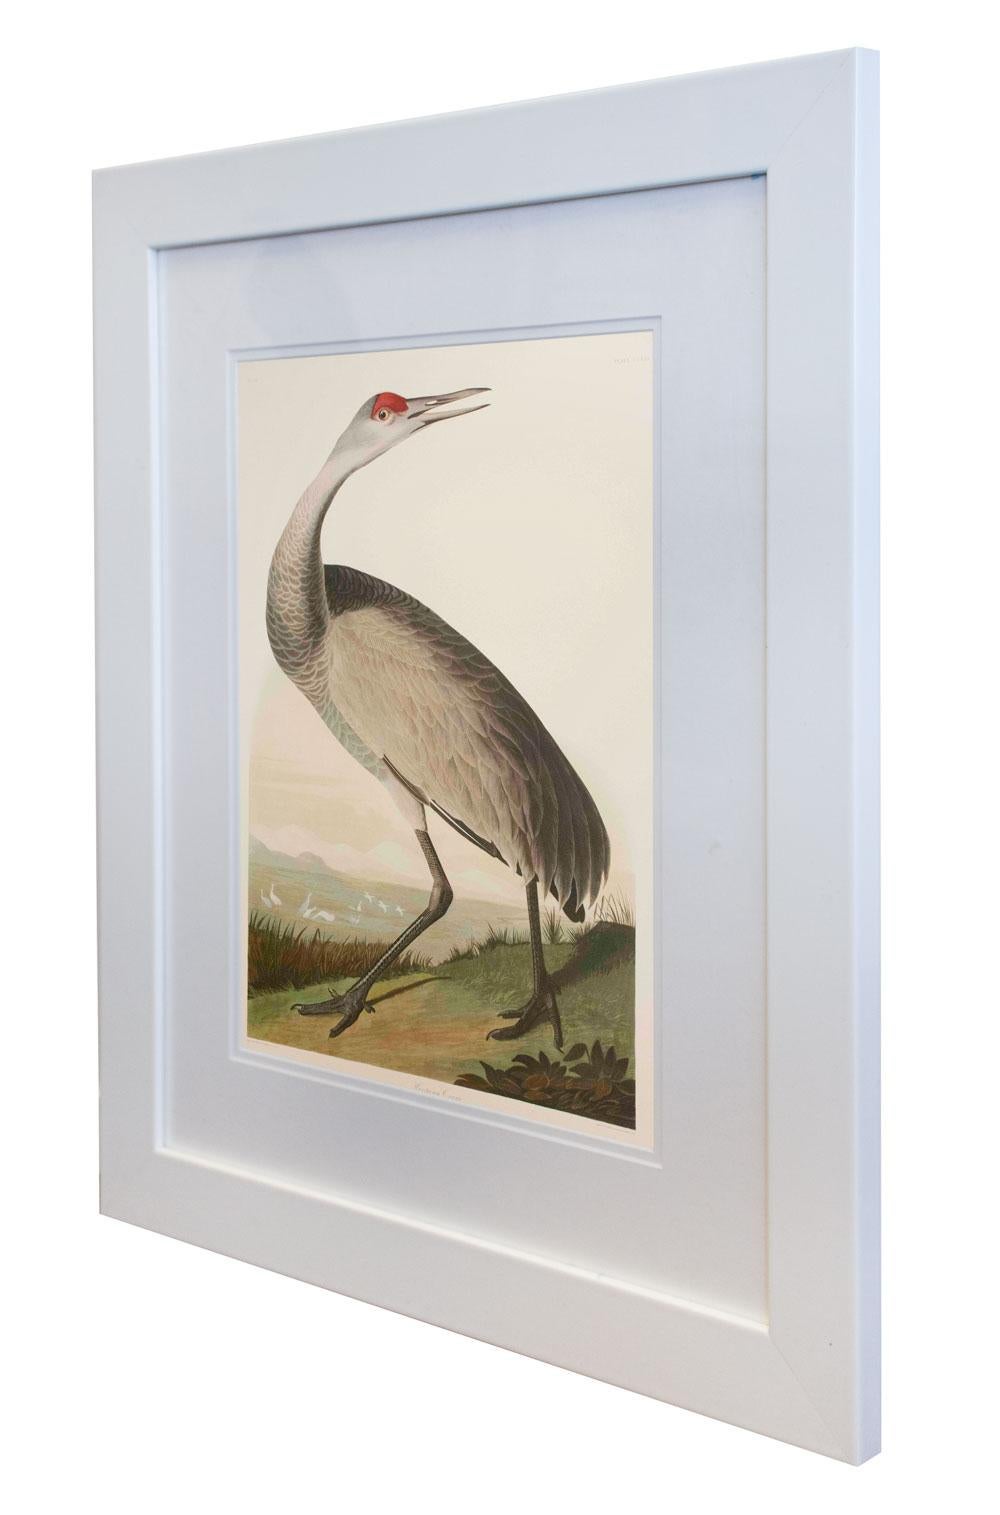 Hooping Crane, Edition Pl. 261 - Print by After John James Audubon